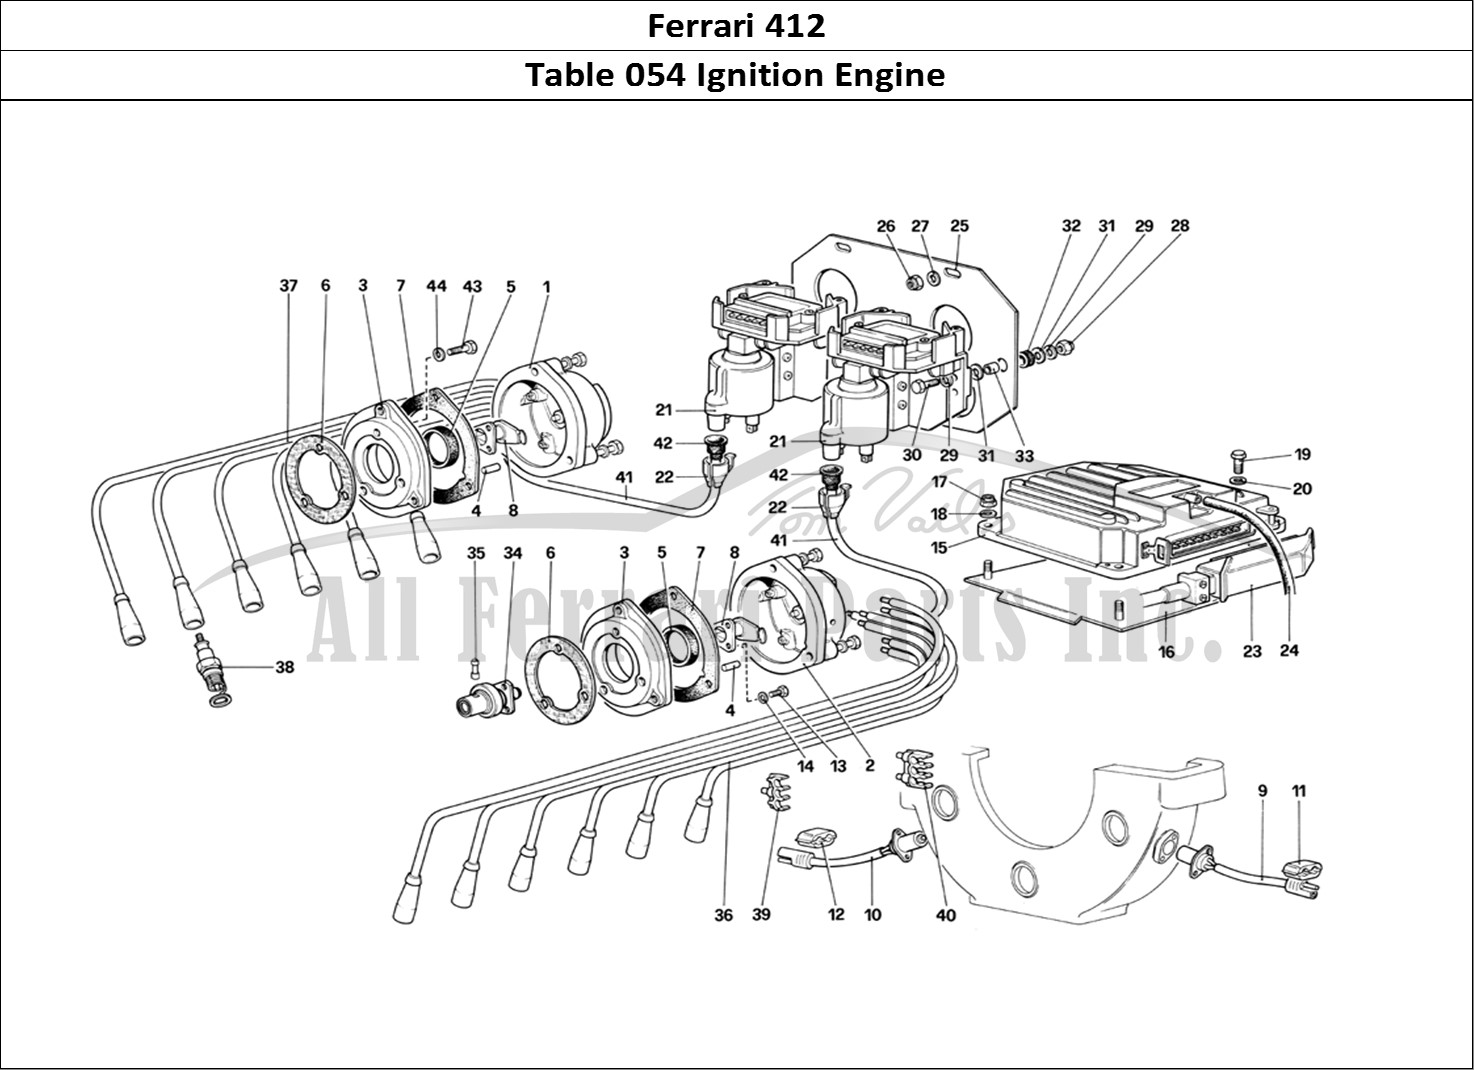 Ferrari Parts Ferrari 412 (Mechanical) Page 054 Engine Ignition